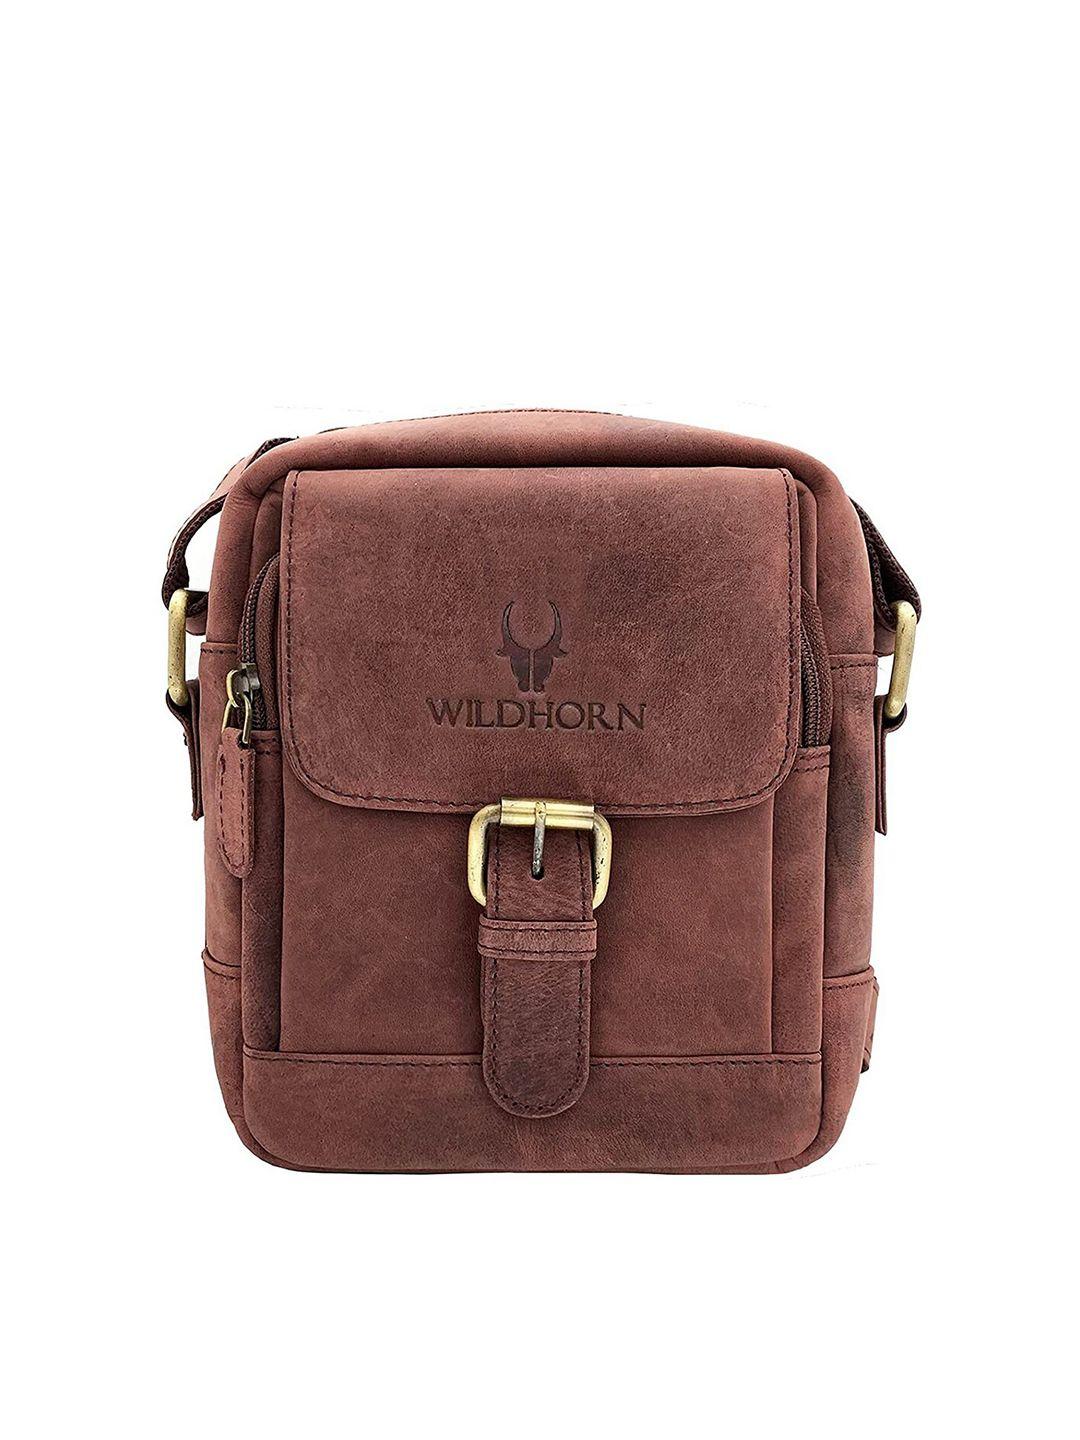 wildhorn men brown textured leather messenger bag